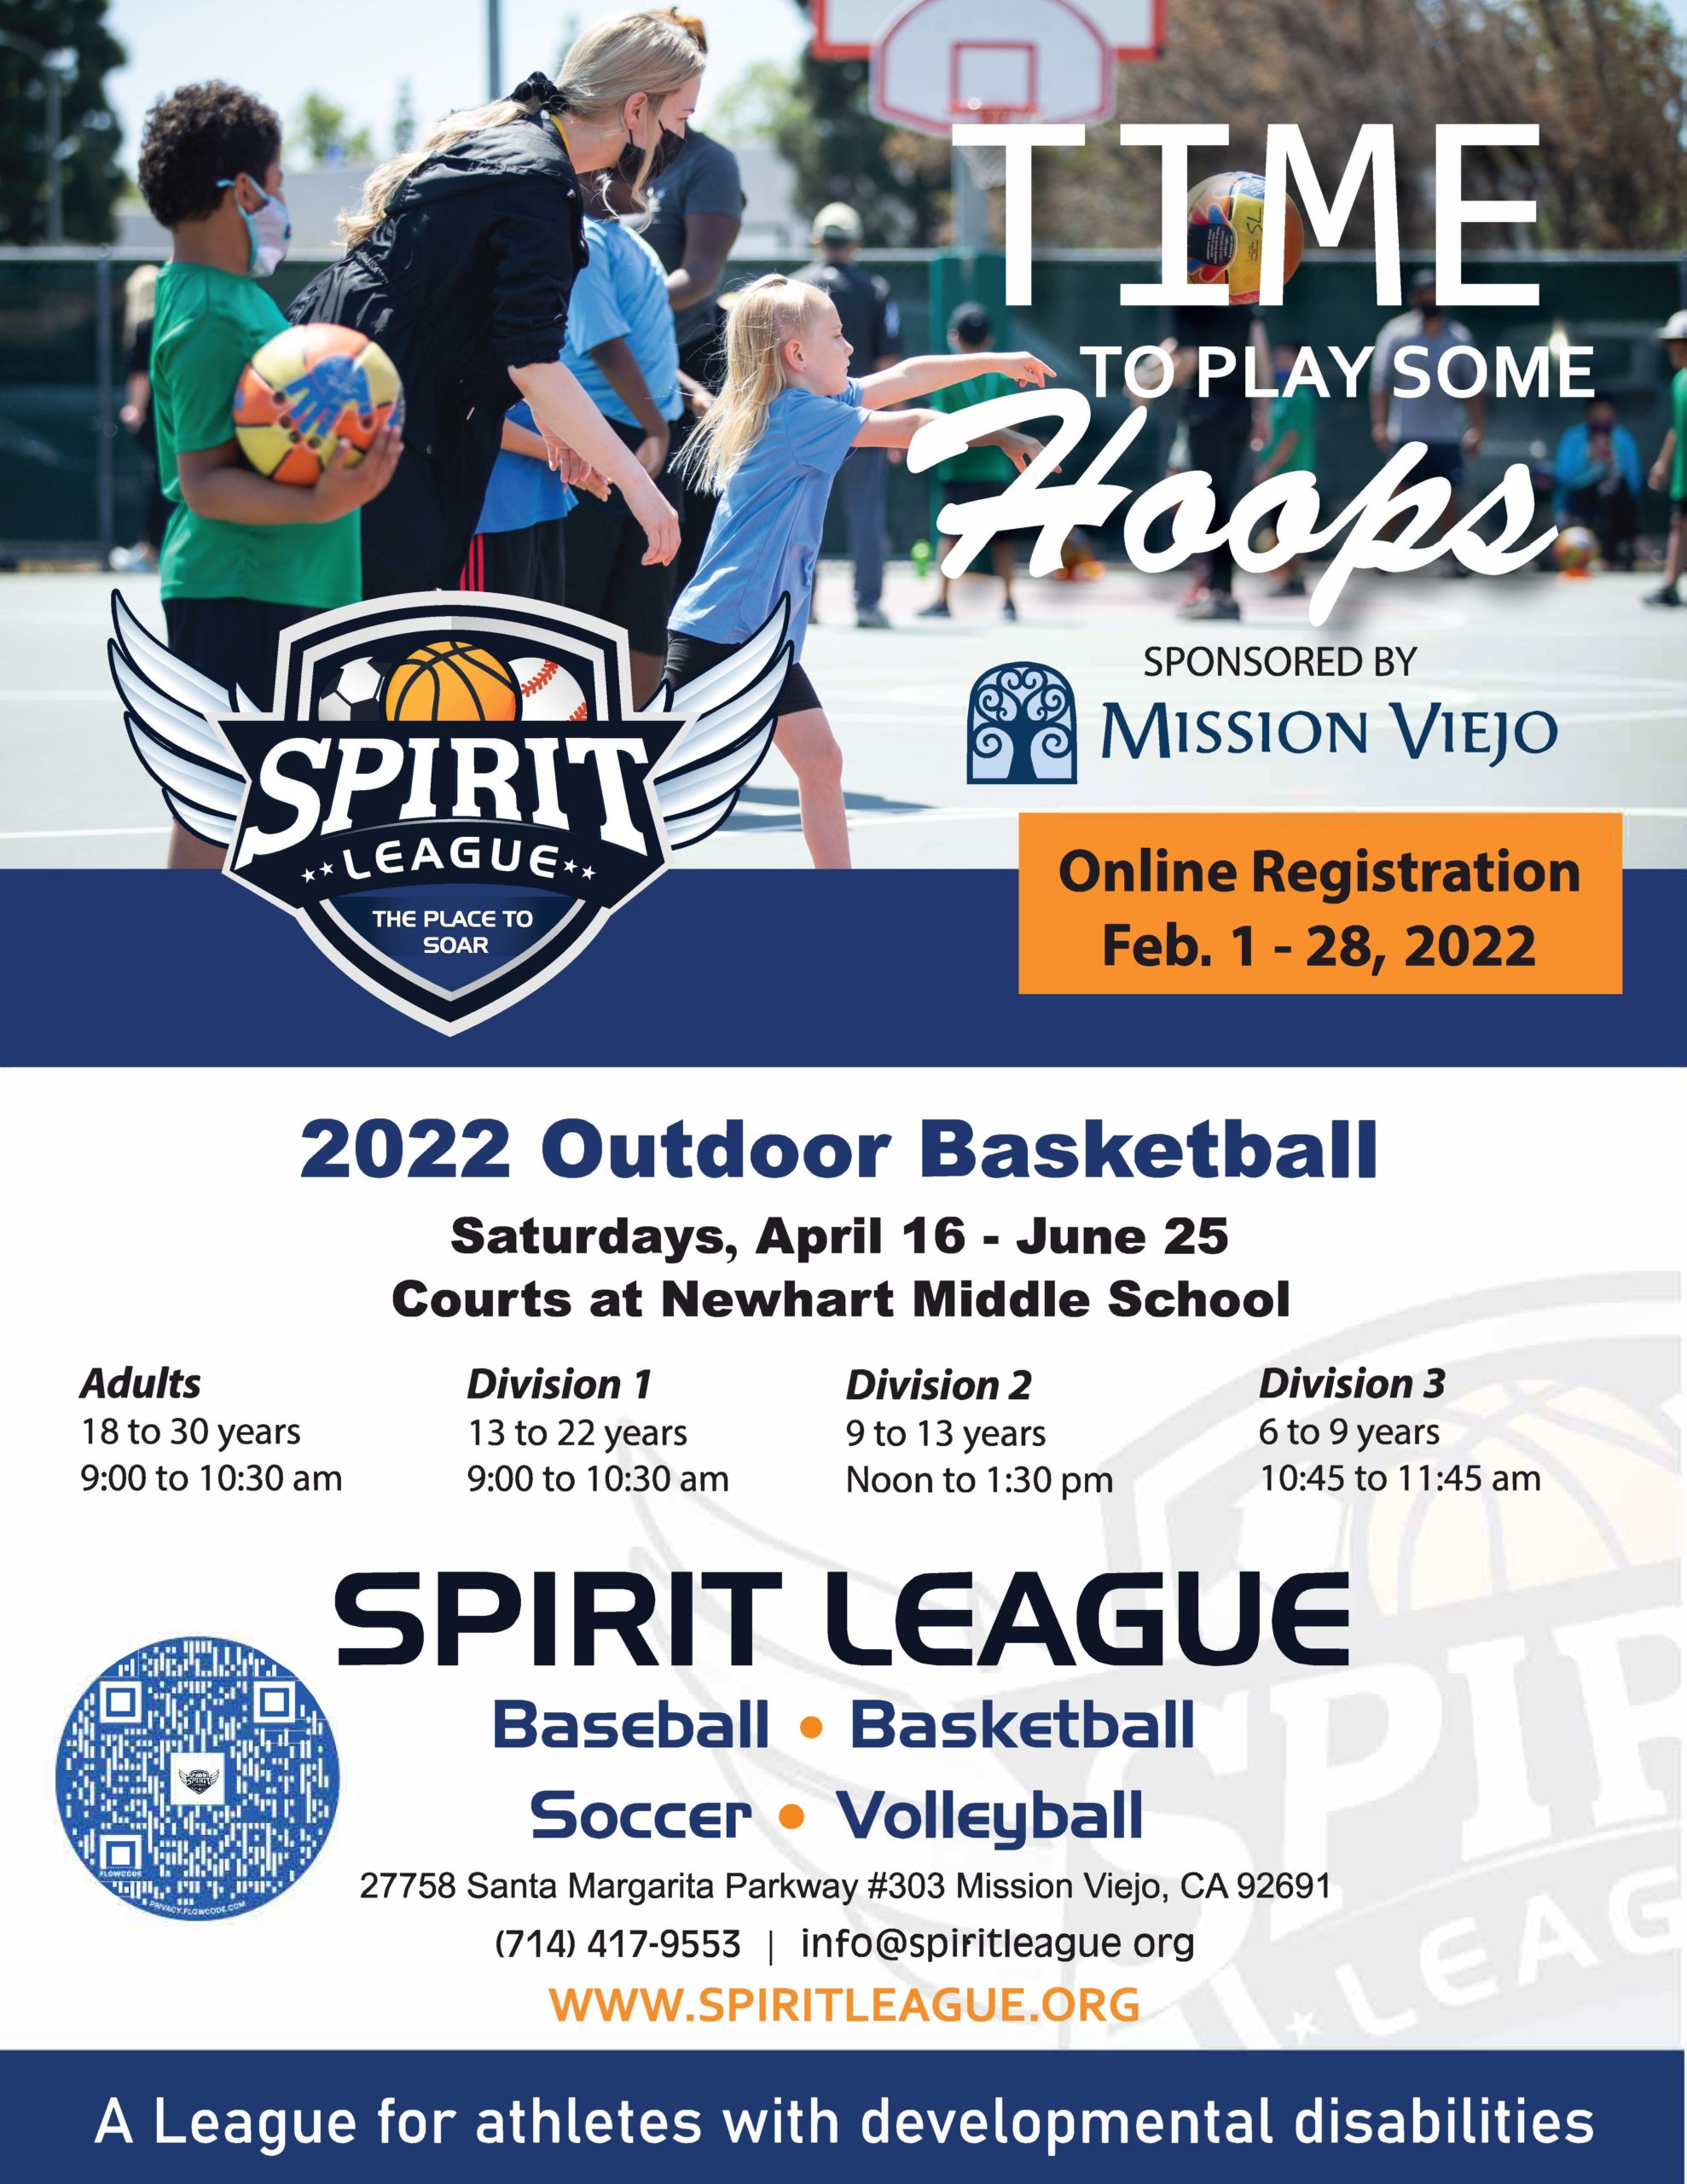 Spirit League Basketball 2022 Flyer icon image